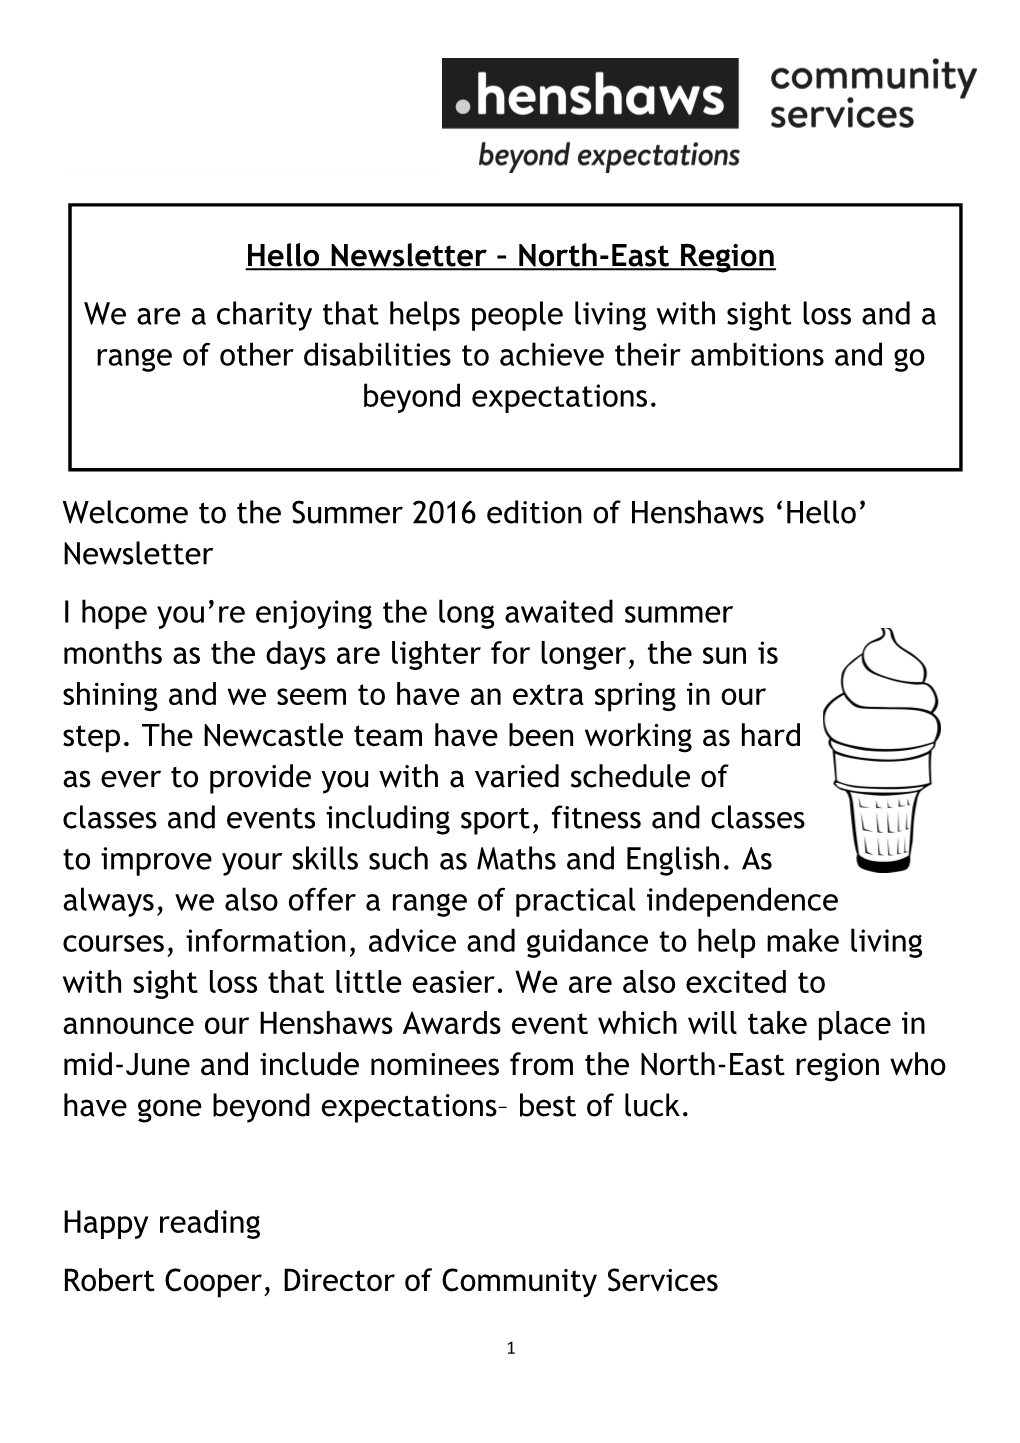 Hello Newsletter North-East Region